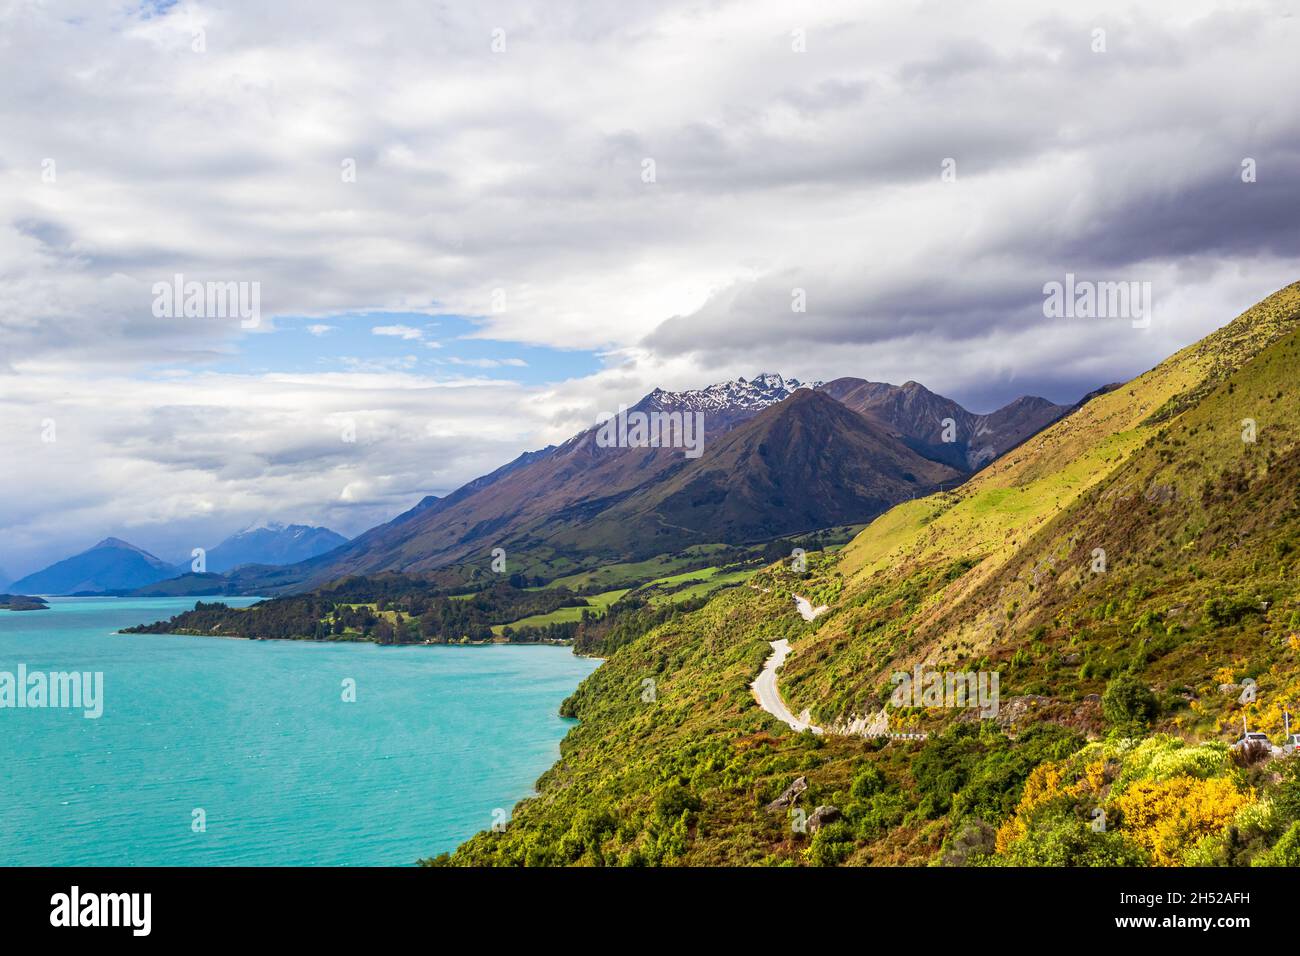 The road to Glenorchy along the shores of Lake Wakatipu. New Zealand Stock Photo